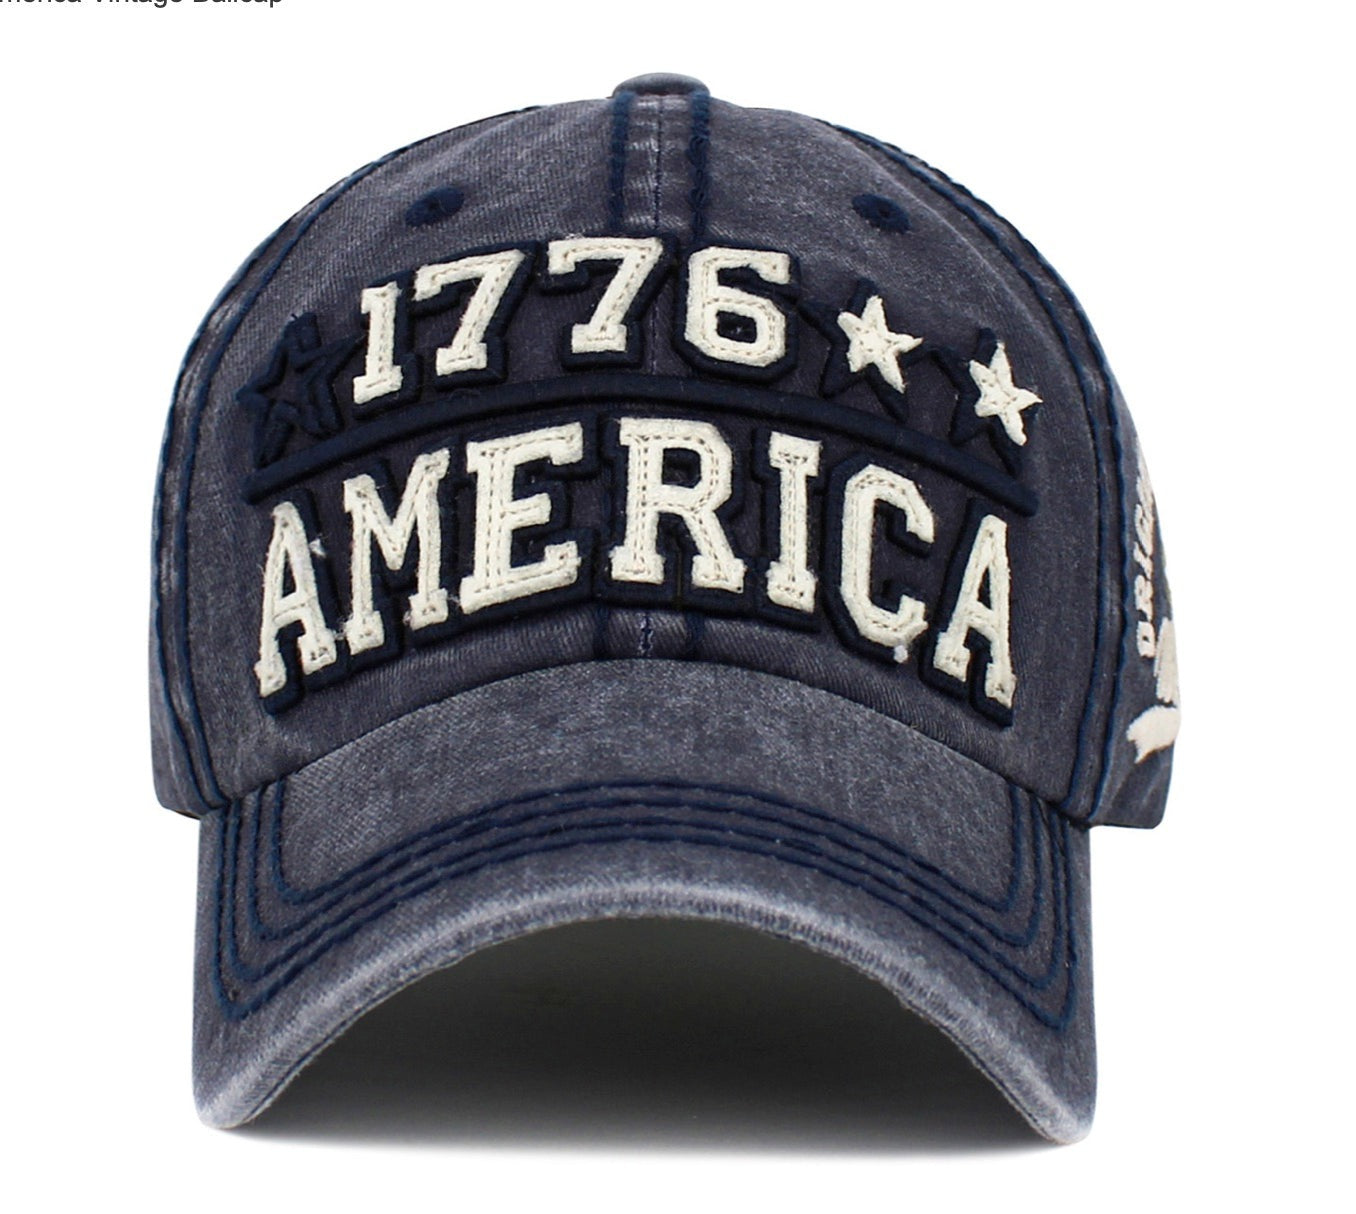 1776 AMERICA DISTRESSED VINTAGE BASEBALL DAD HAT